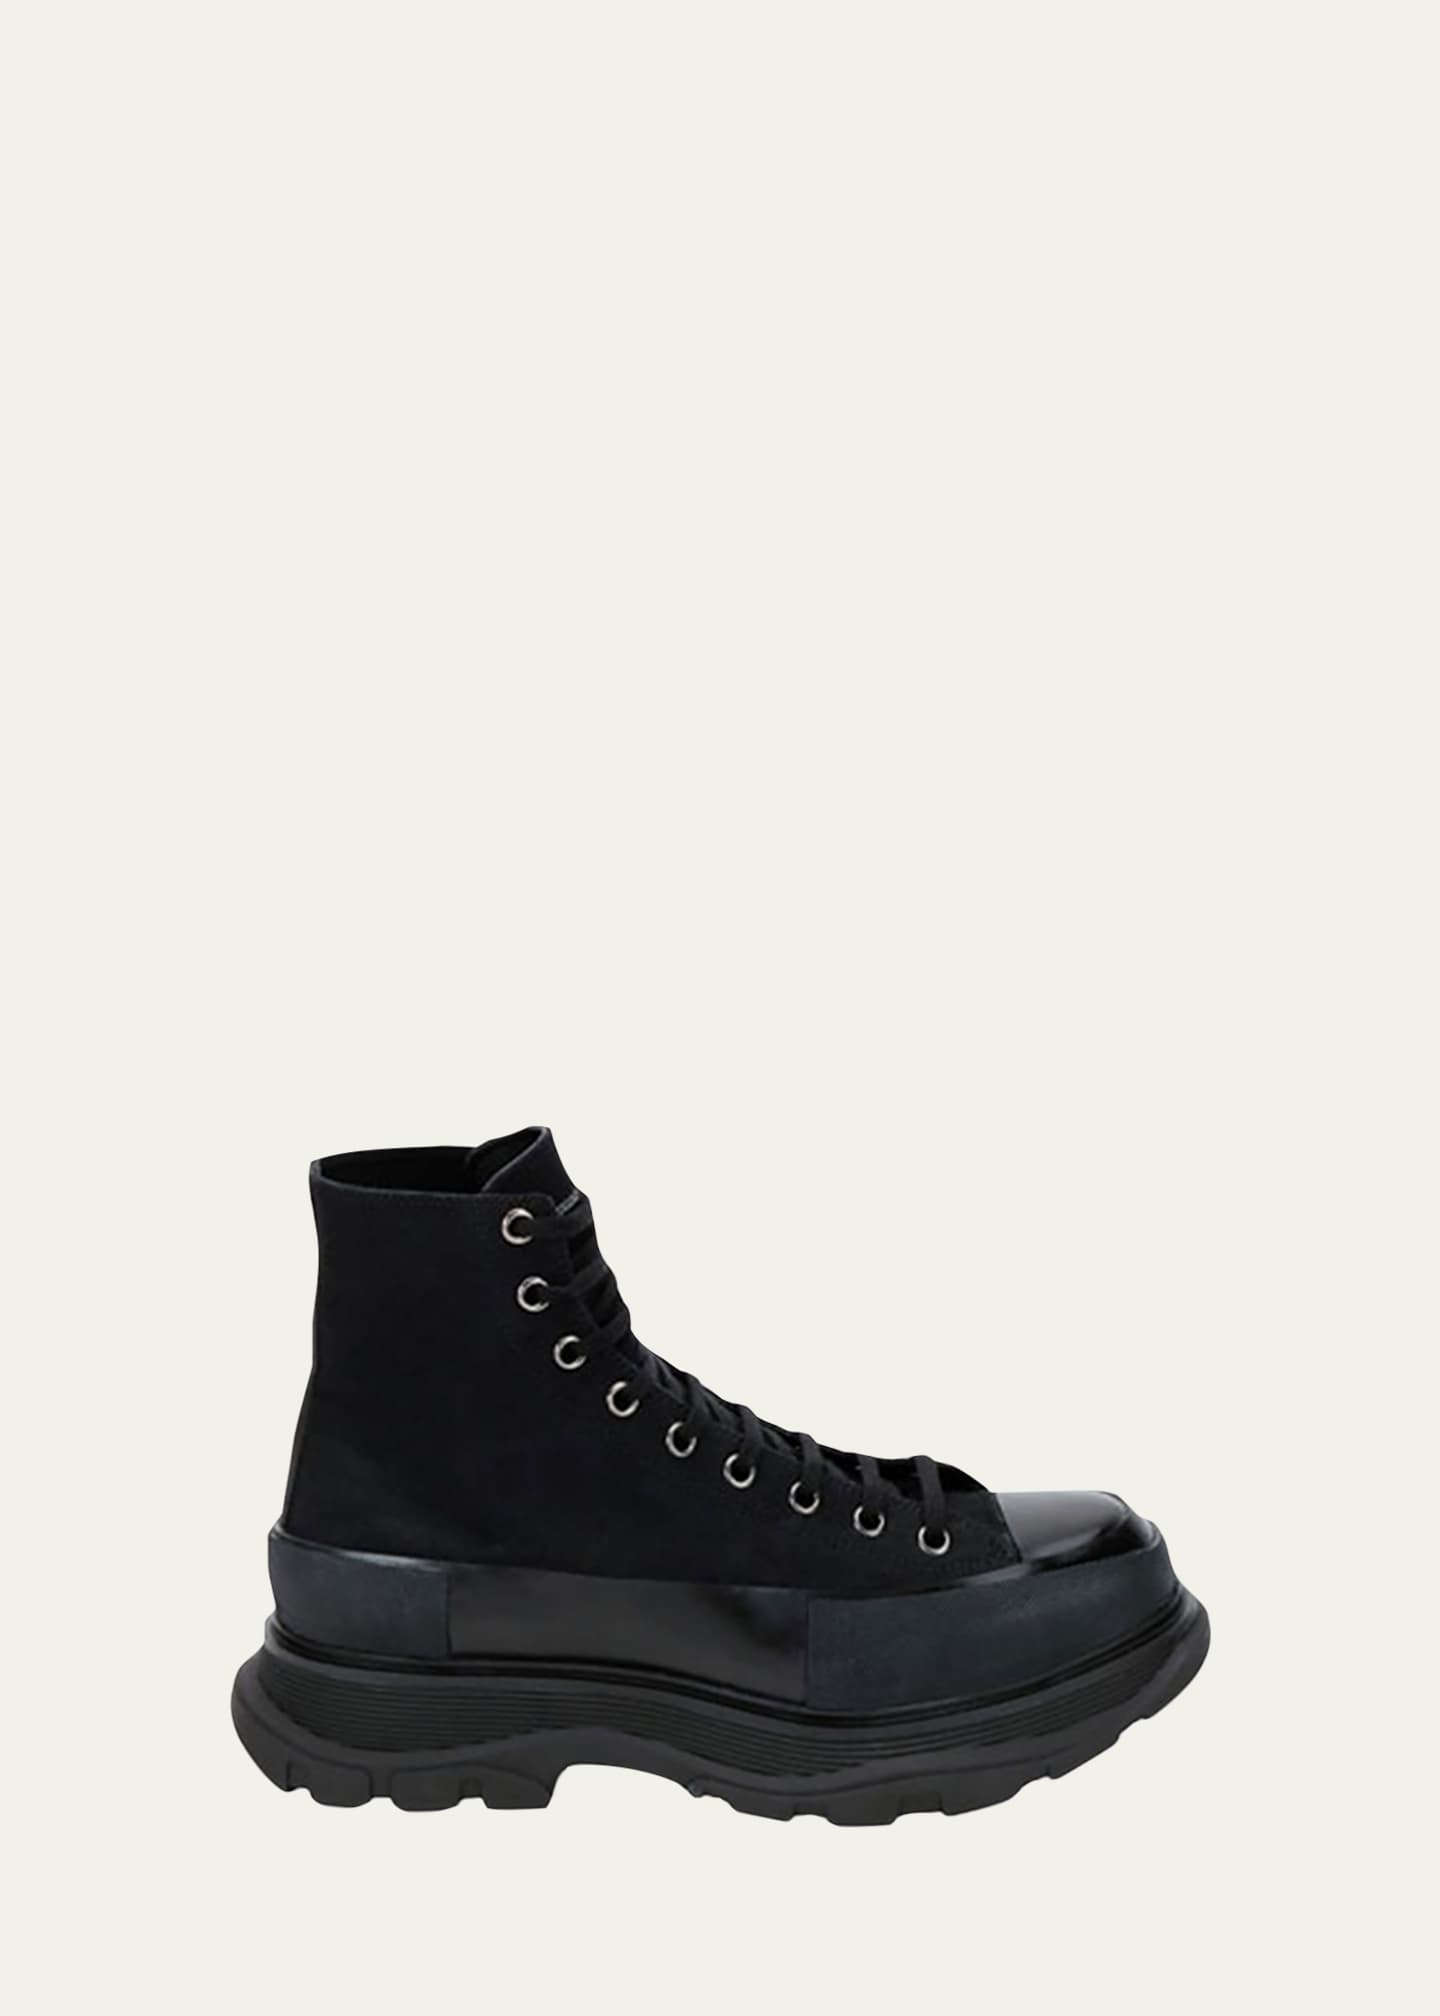 Alexander Mcqueen Tread Slick Boots in Black white | 3D model